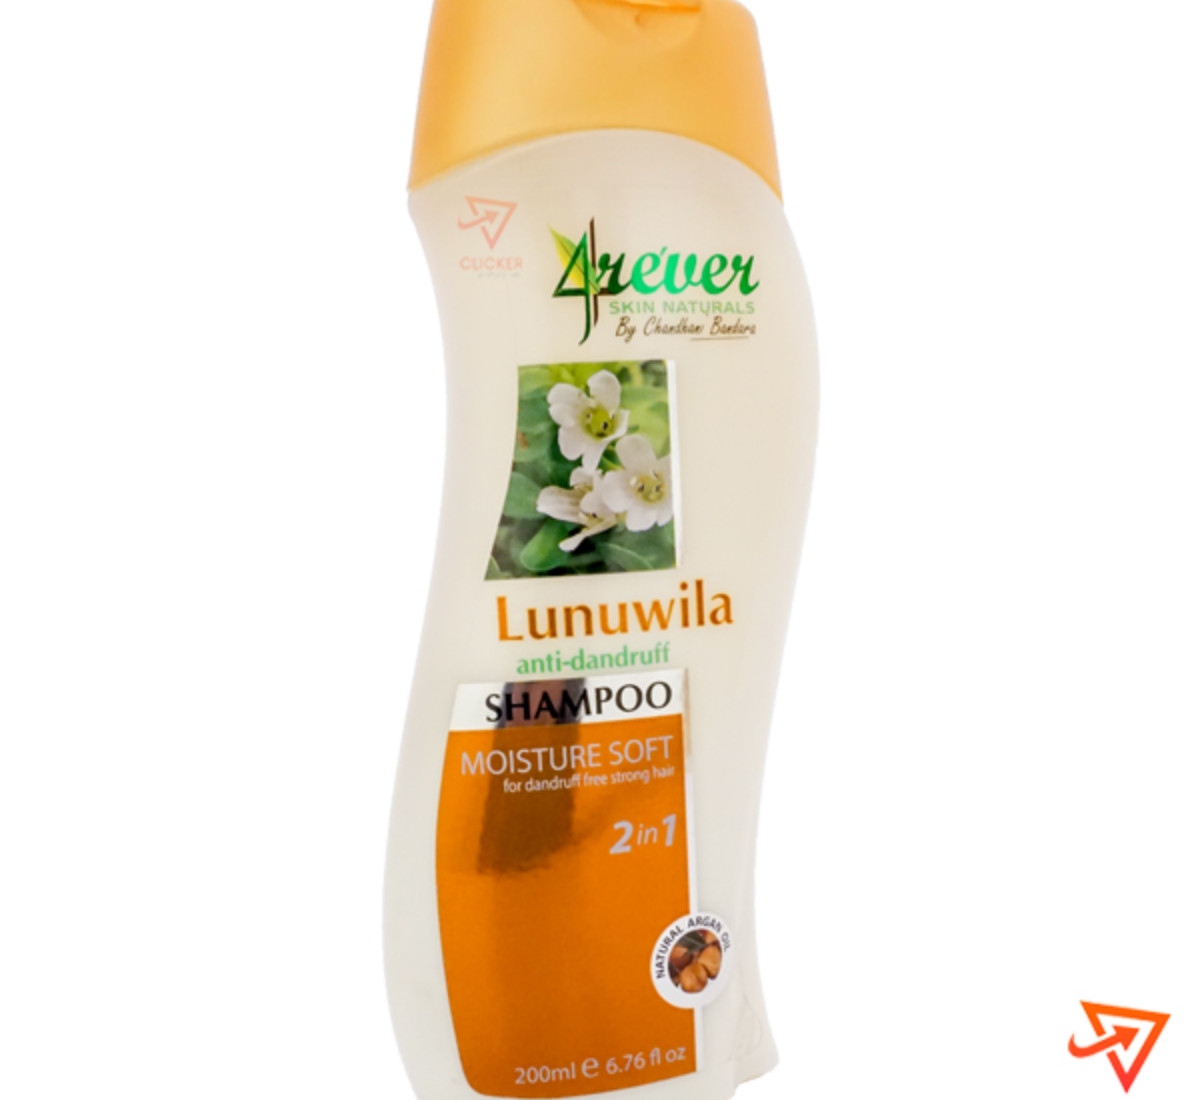 Clicker product 200ml 4REVER lunuwila anti-dandruff shampoo 1070